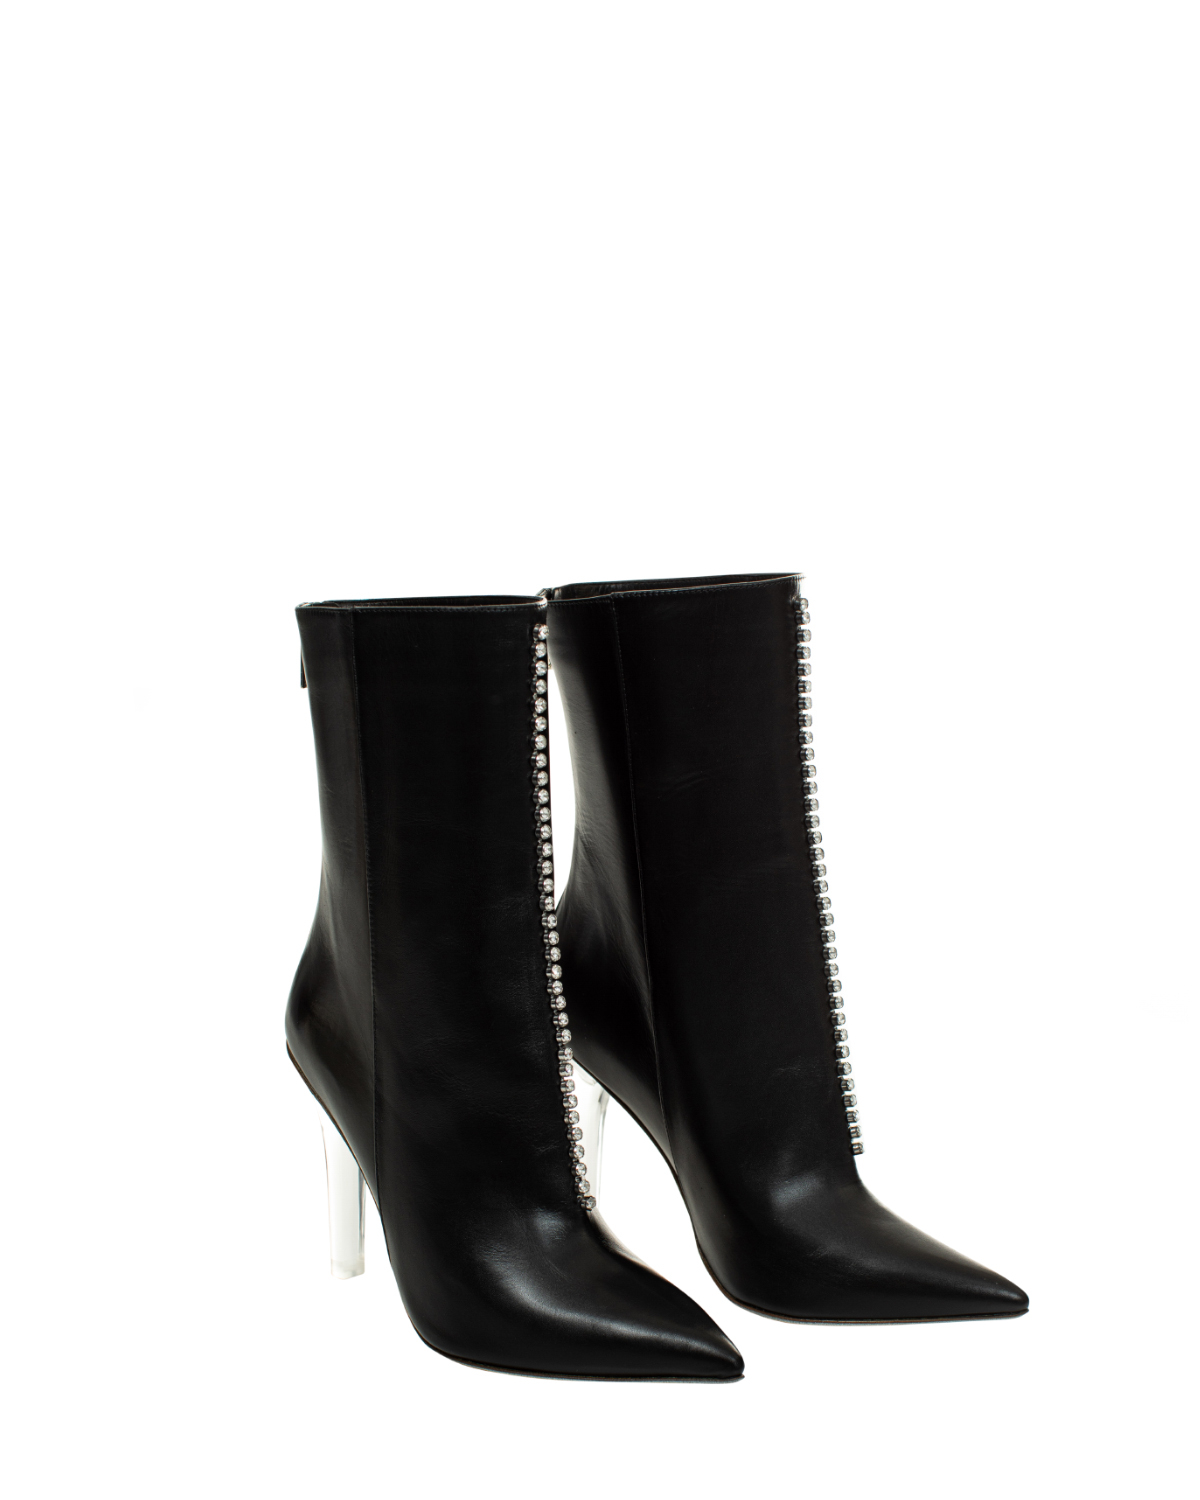 Black high boots | Sale, -30%, Private sale, Accessories | Genny